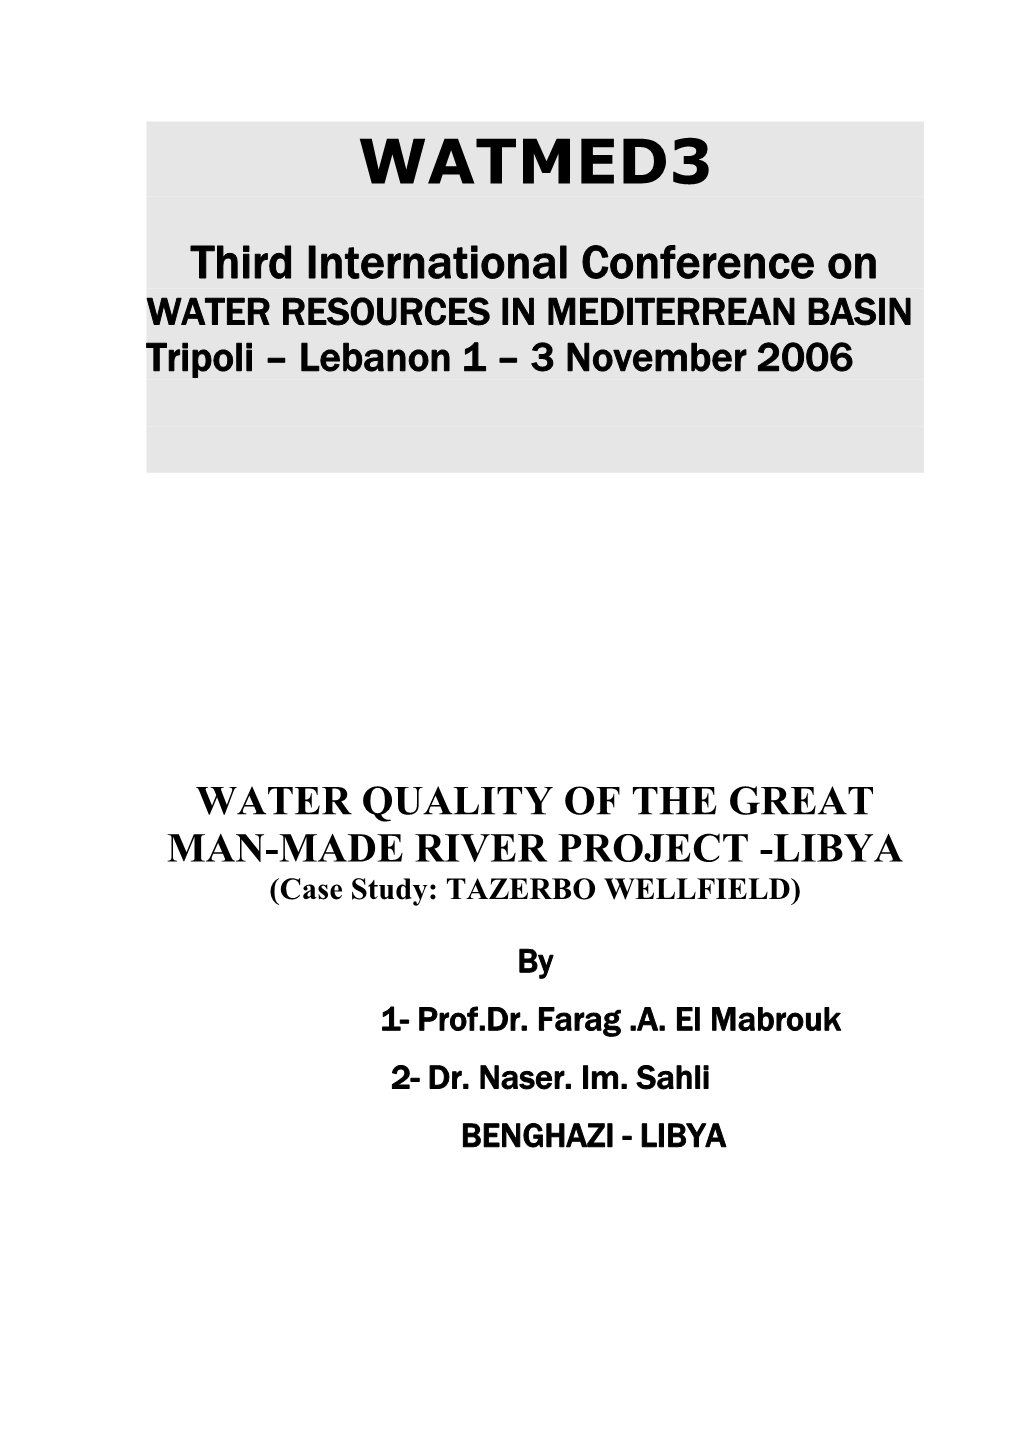 Water Qualty in the Tazerbo Wellfield, Libya